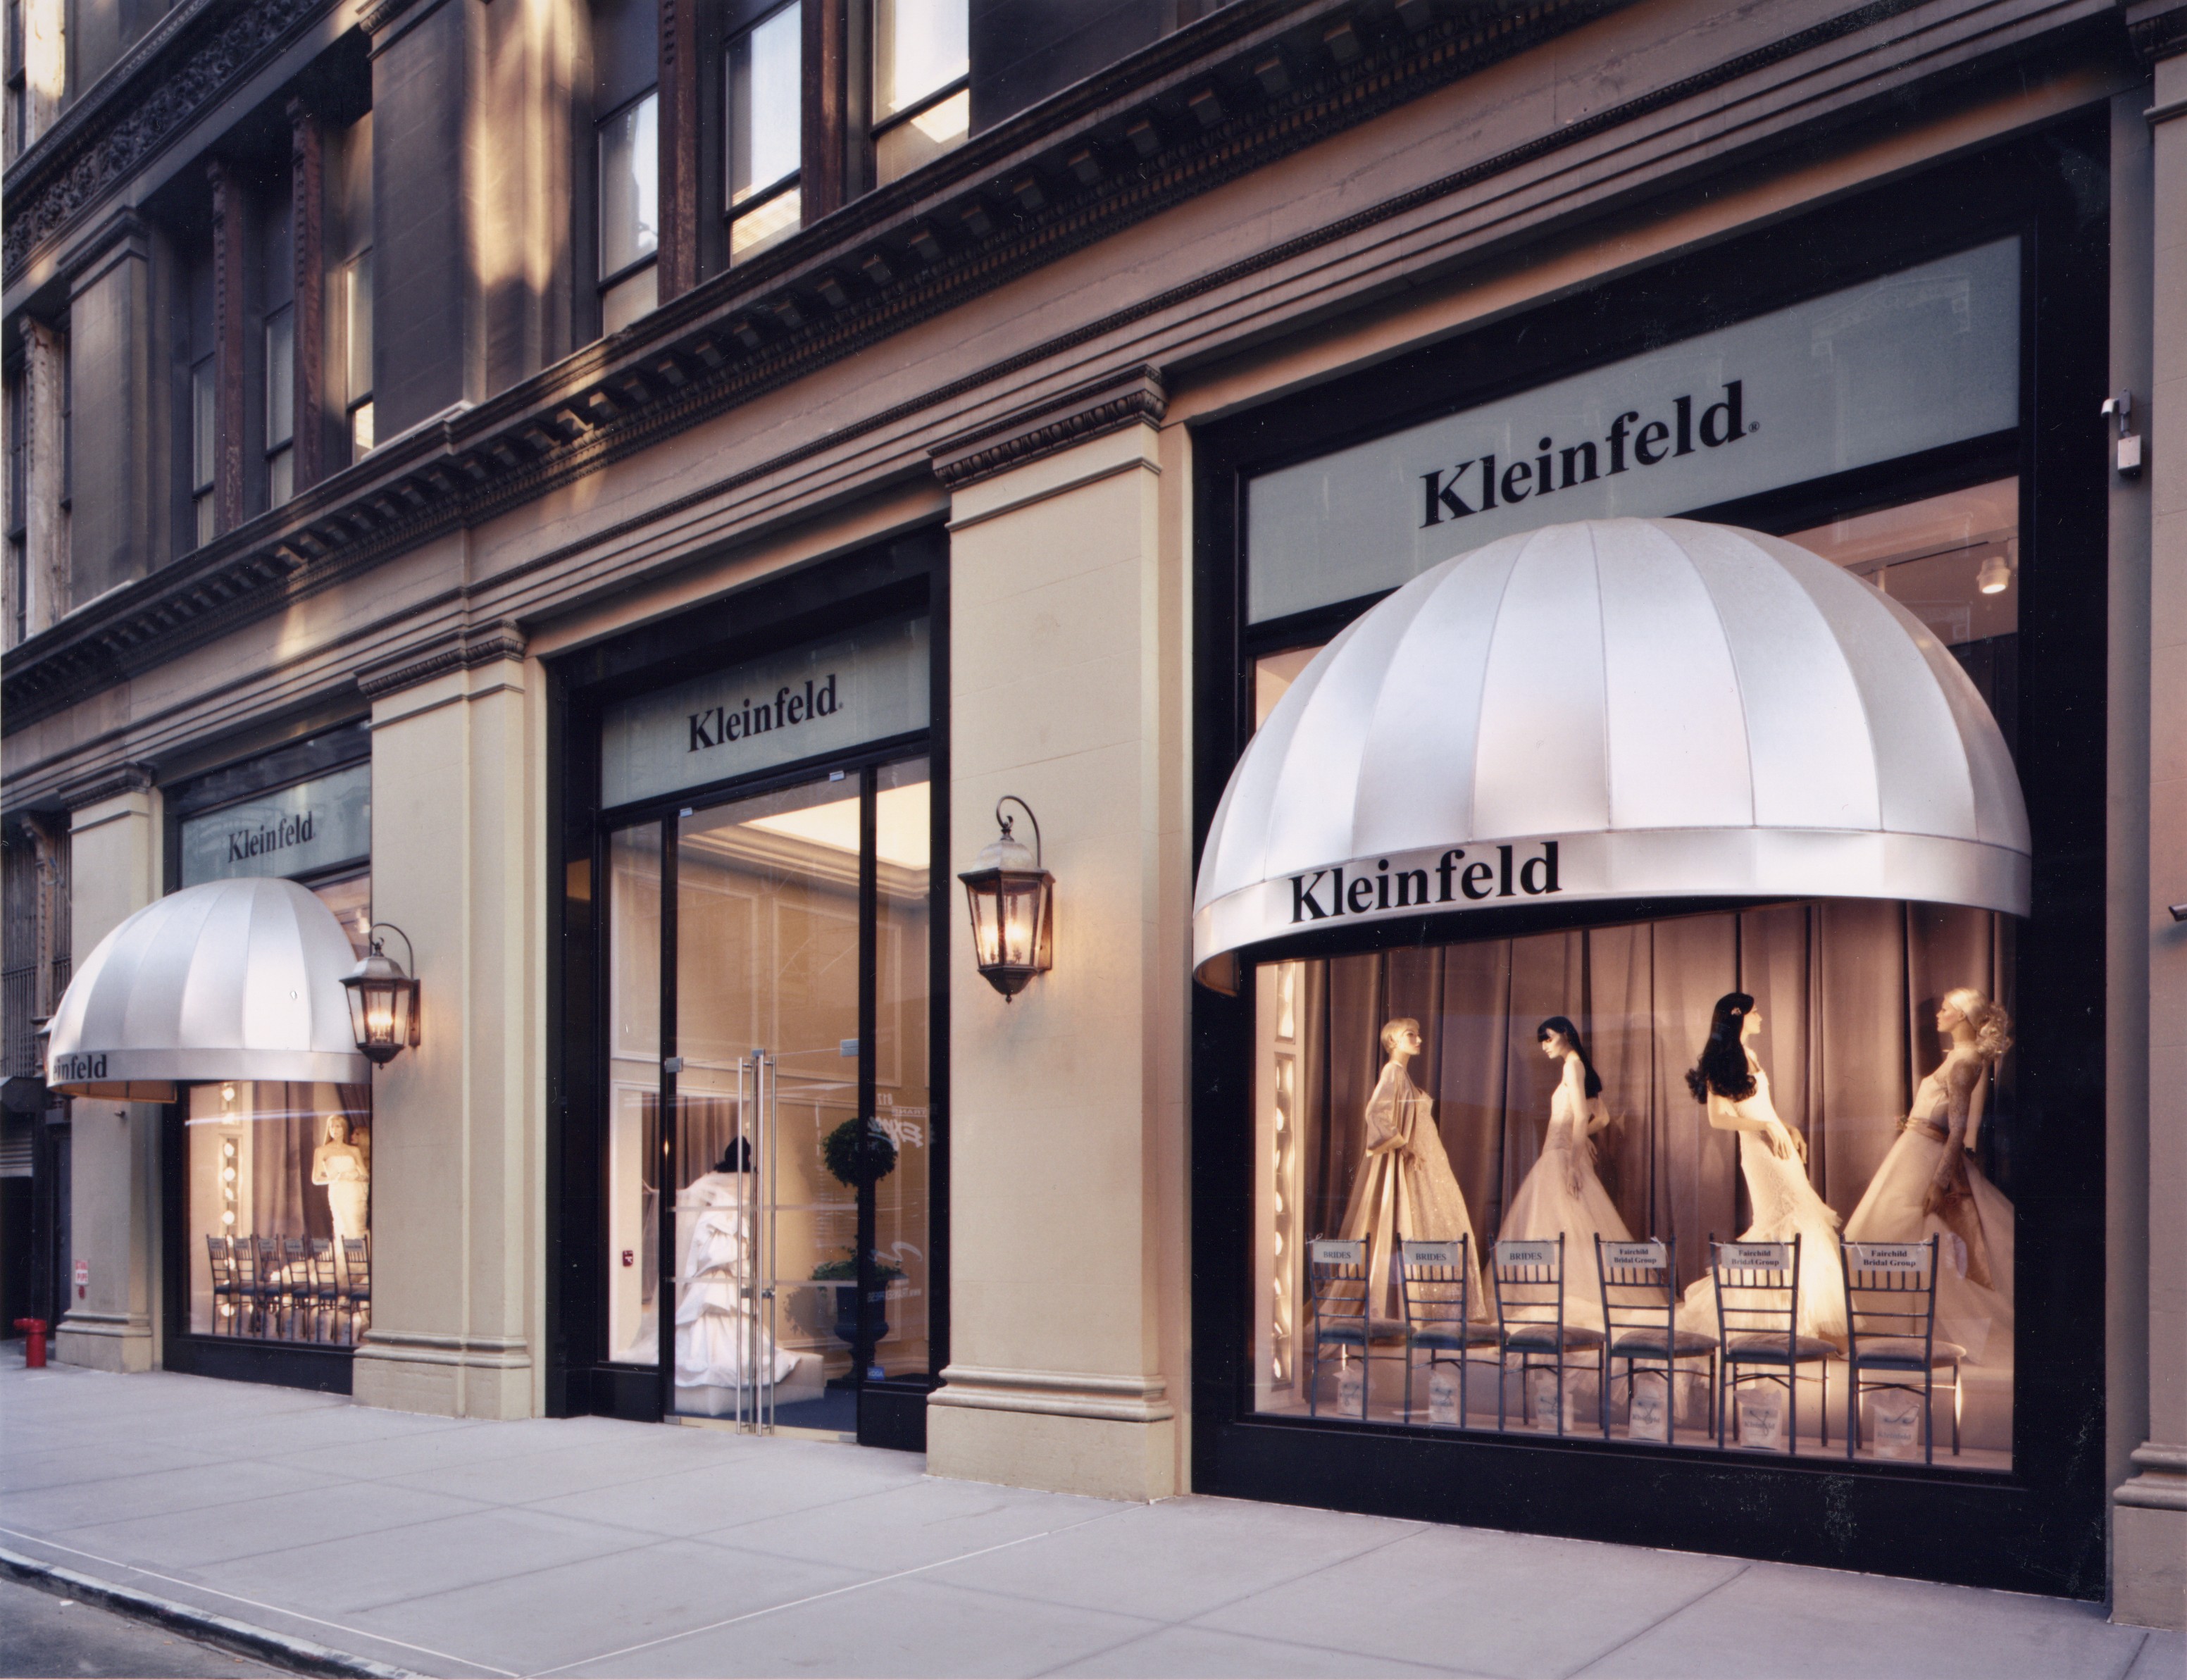 How to Visit Kleinfeld As a Fan | Kleinfeld Bridal